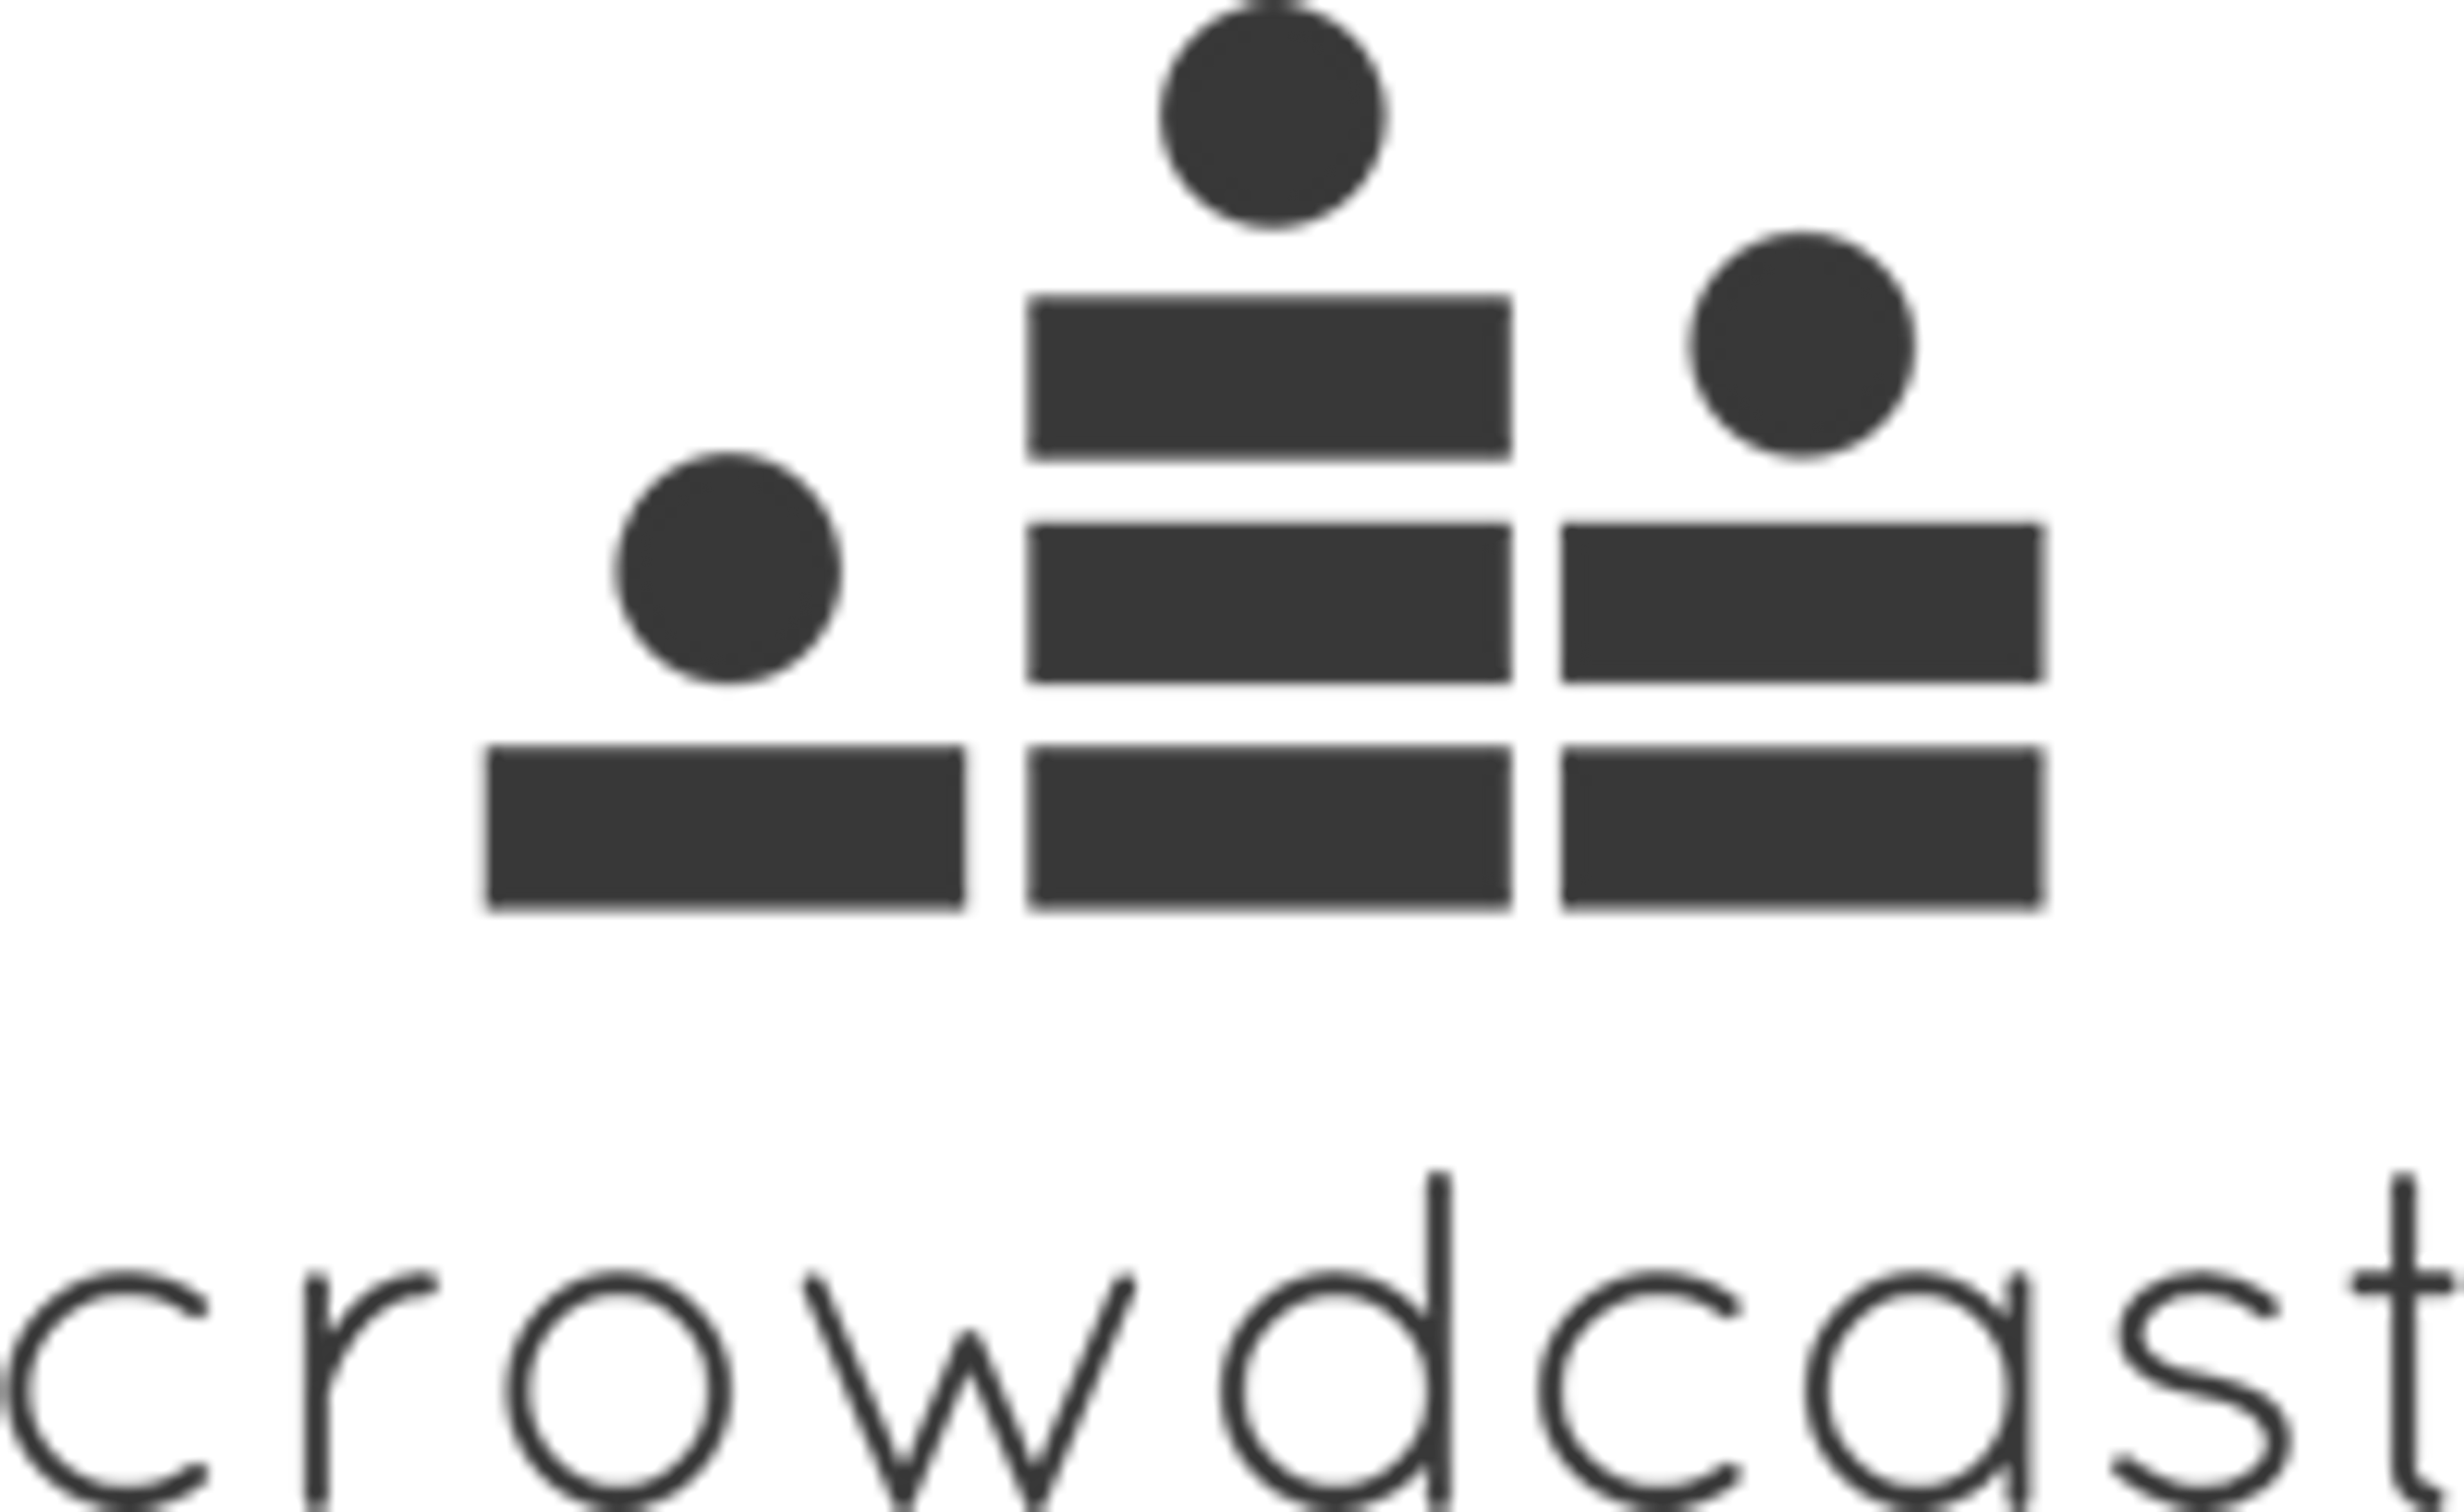 Crowdcast logo